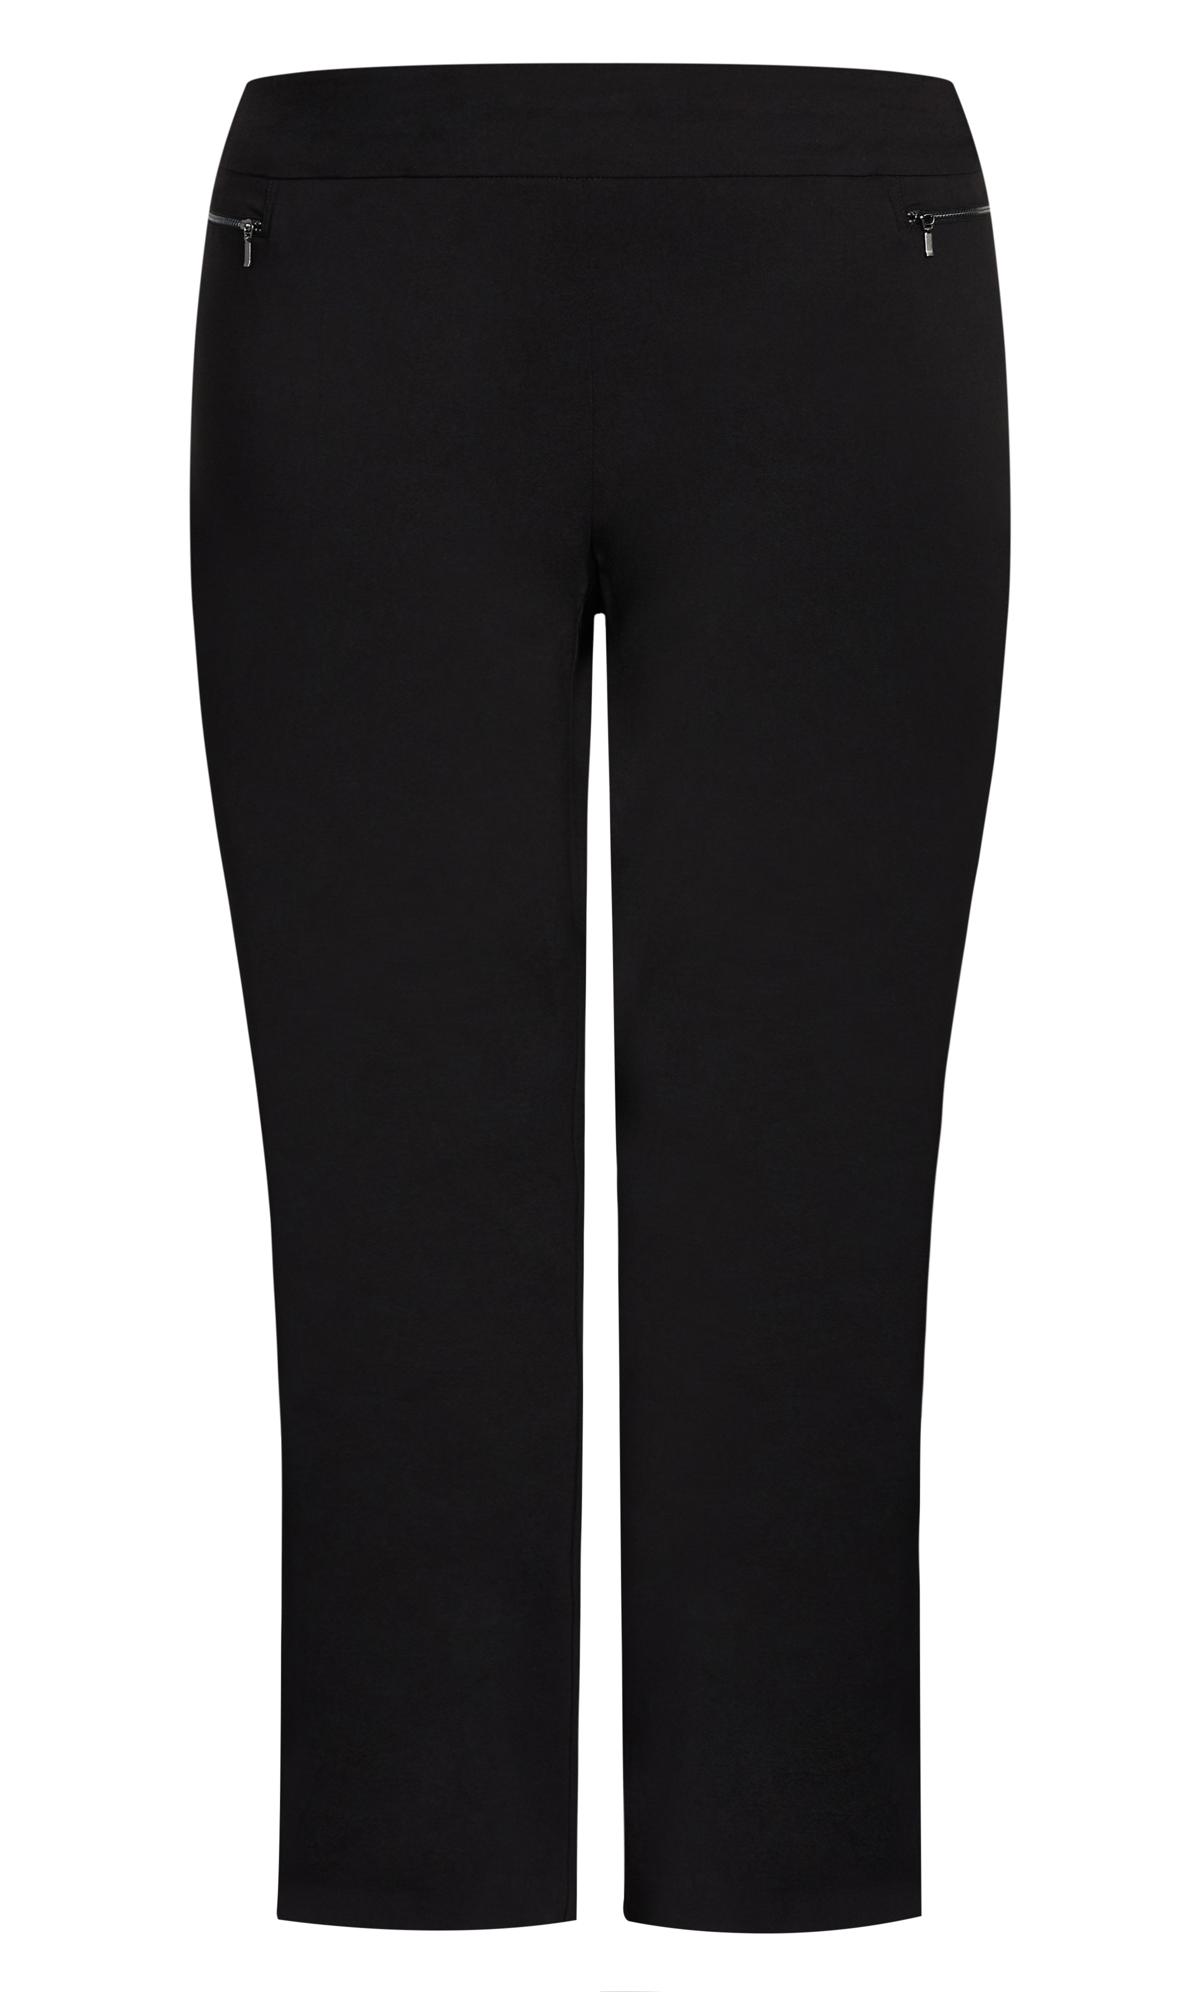 Super Stretch Black Zip Pant Tall Length 3